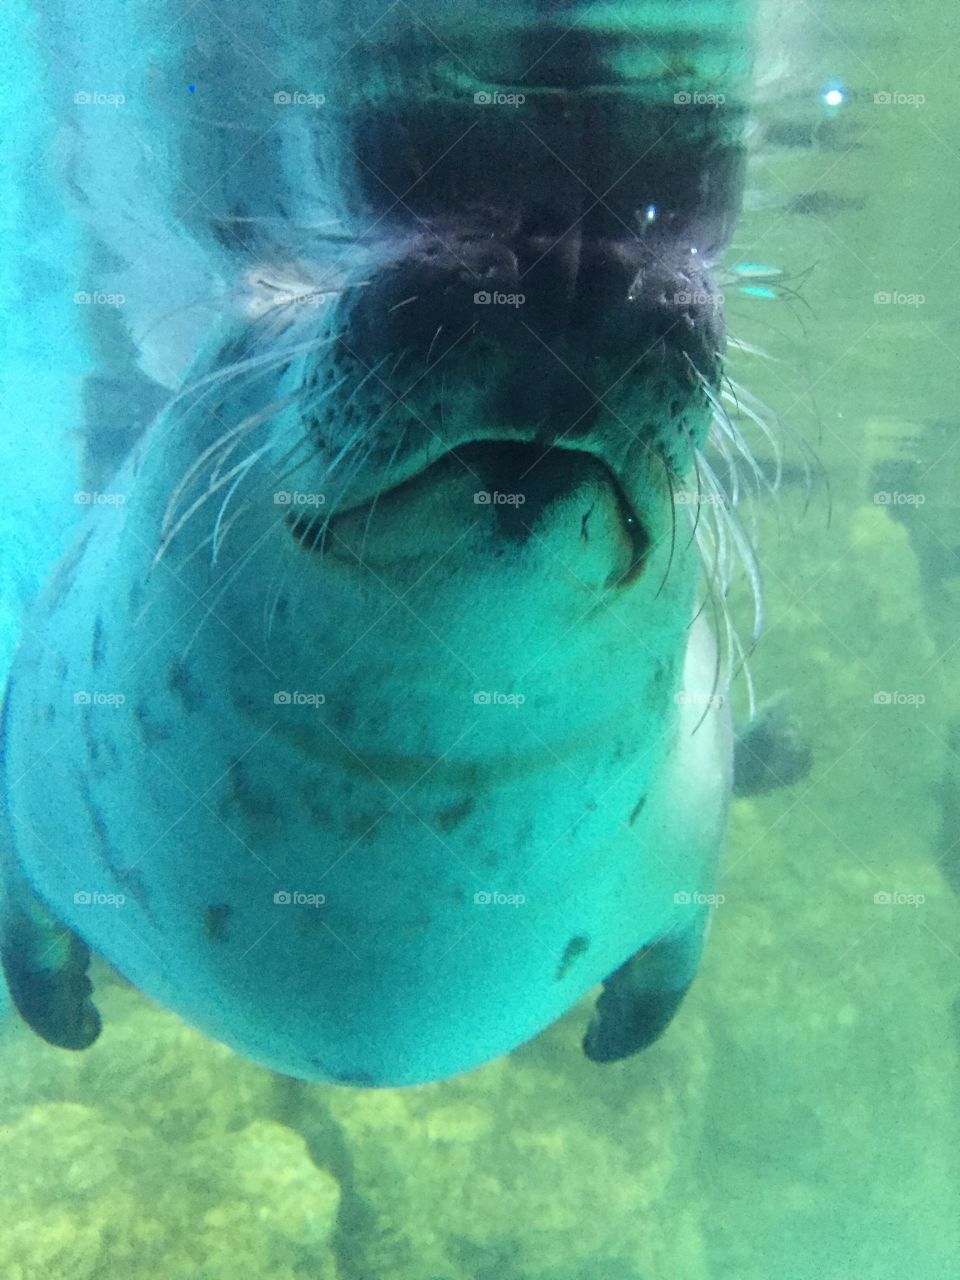 Seal up close